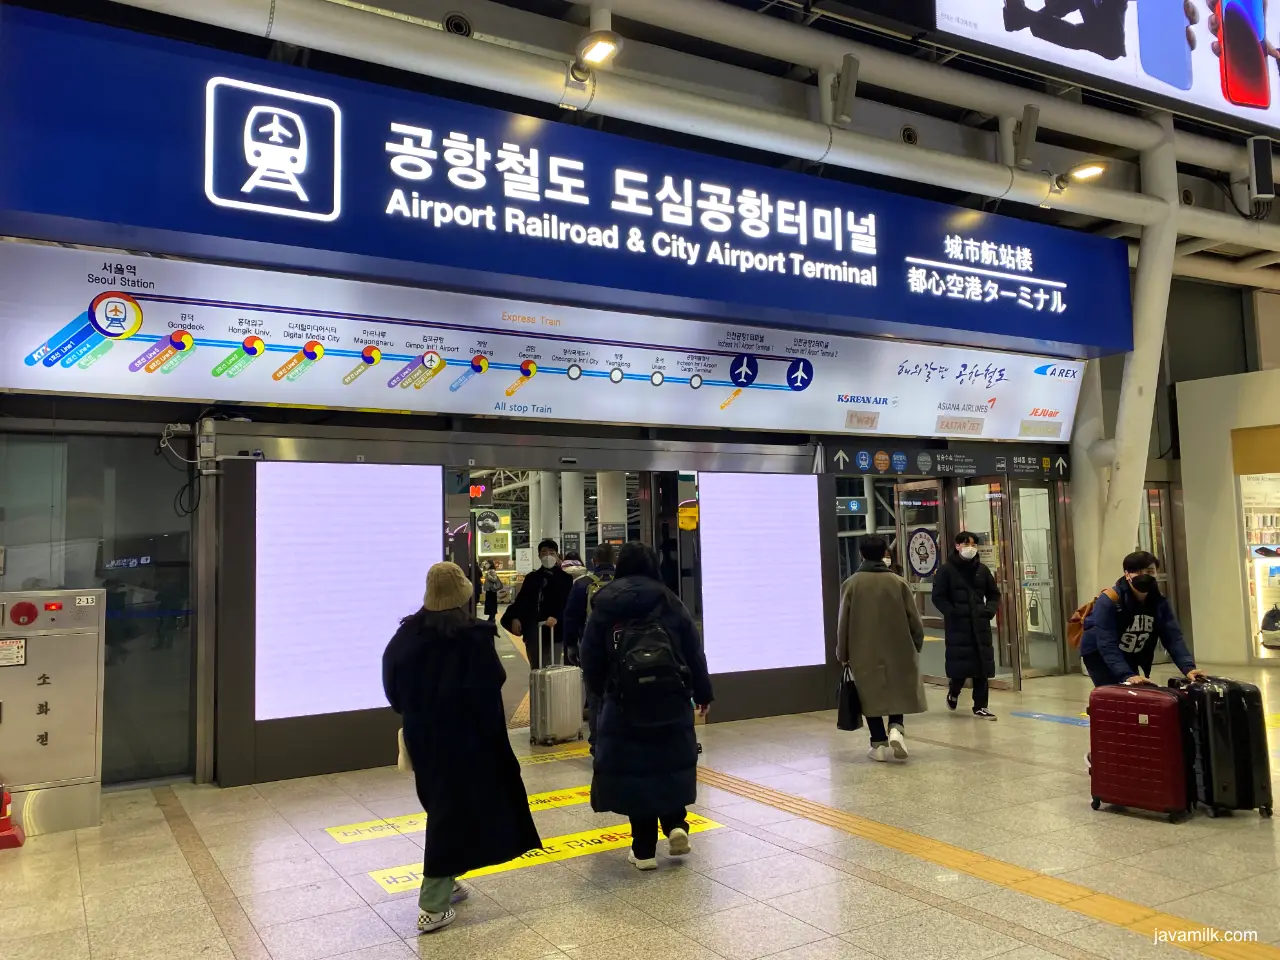 Arex Station di dalam Seoul Station